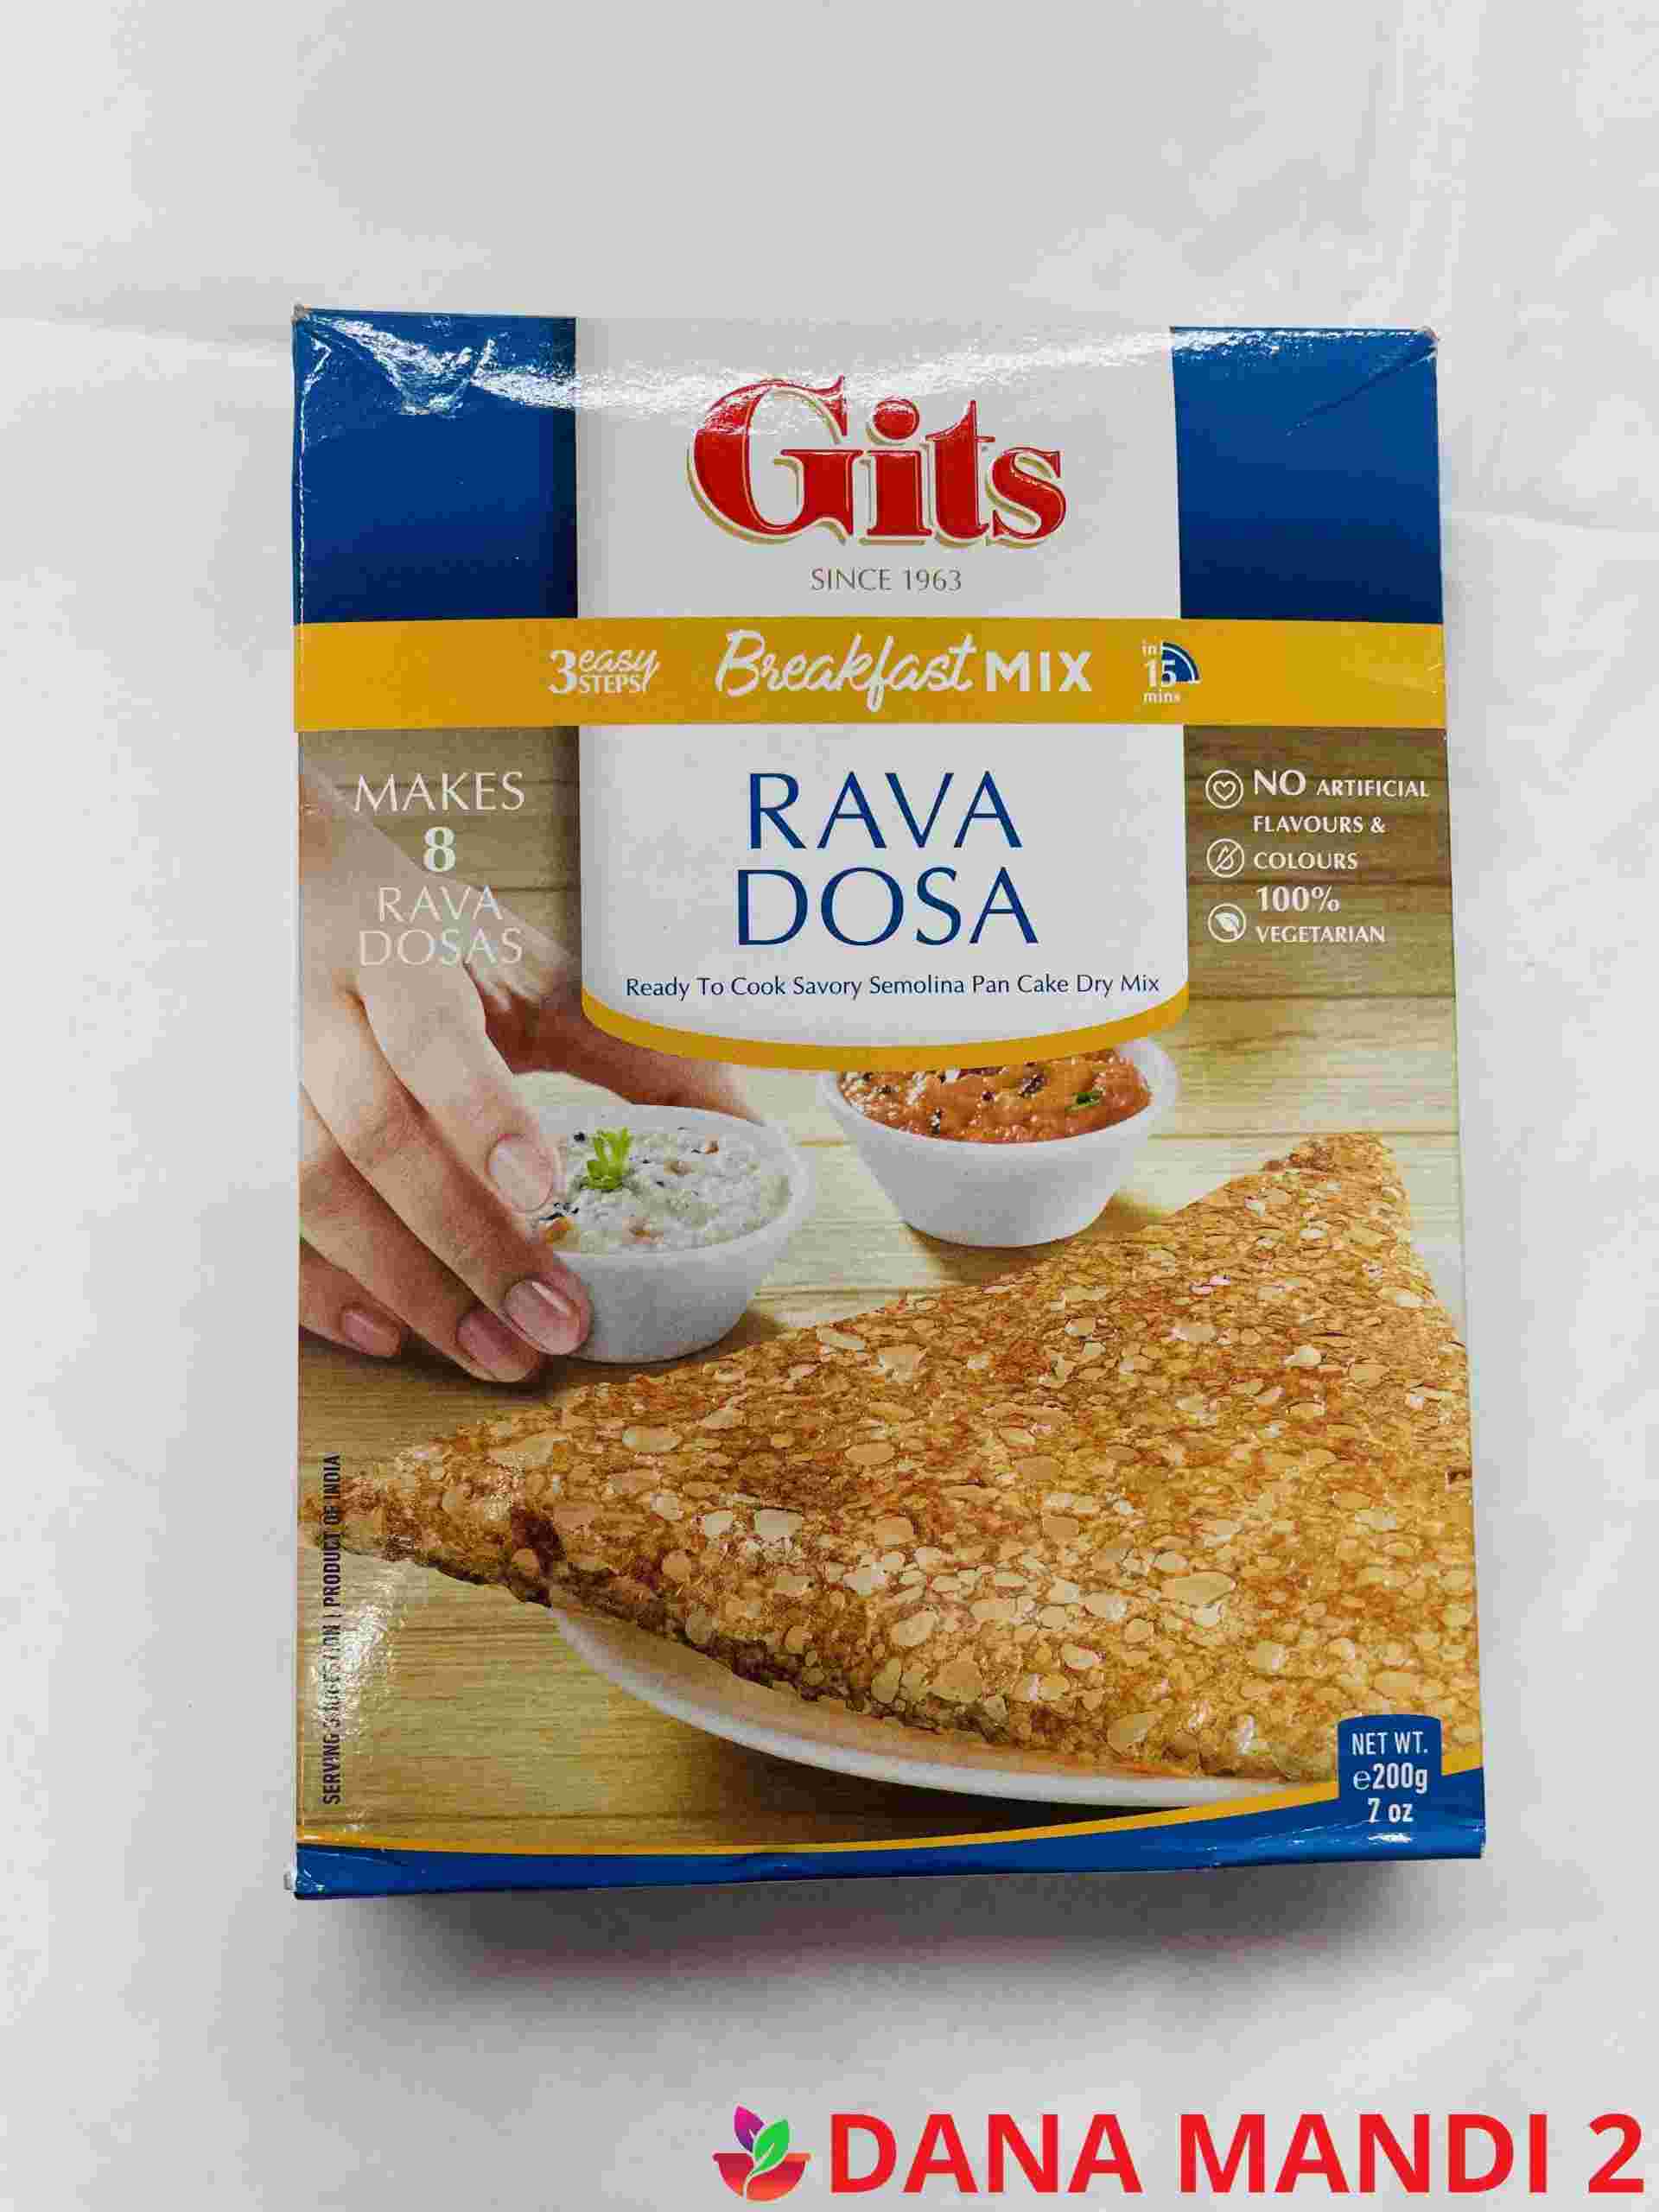 GITS Rava Dosa Breakfast Mix